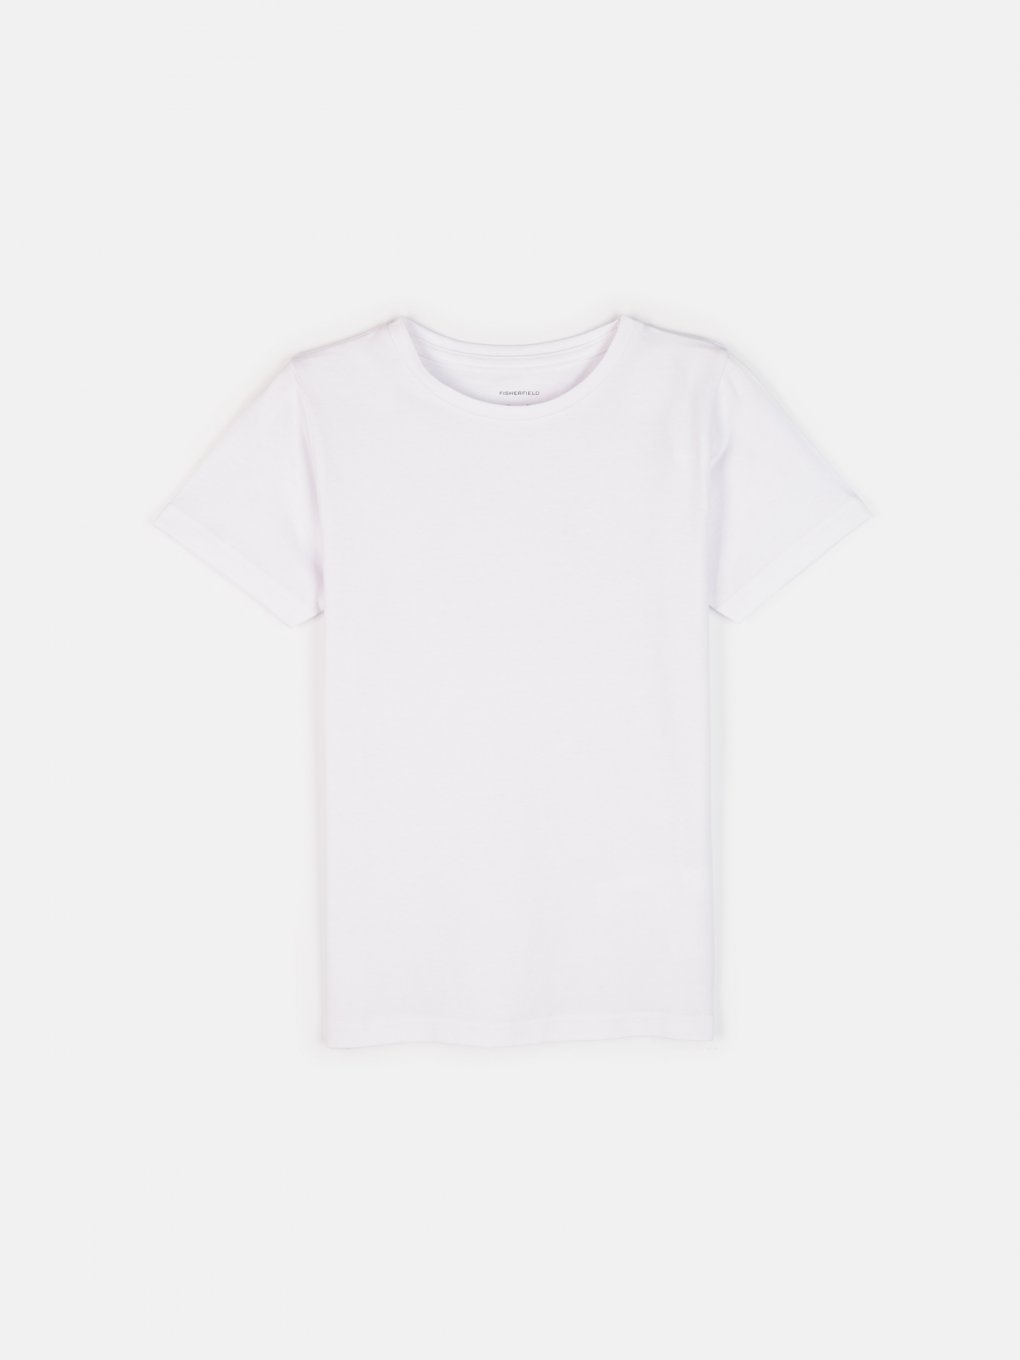 Basic cotton stretch t-shirt